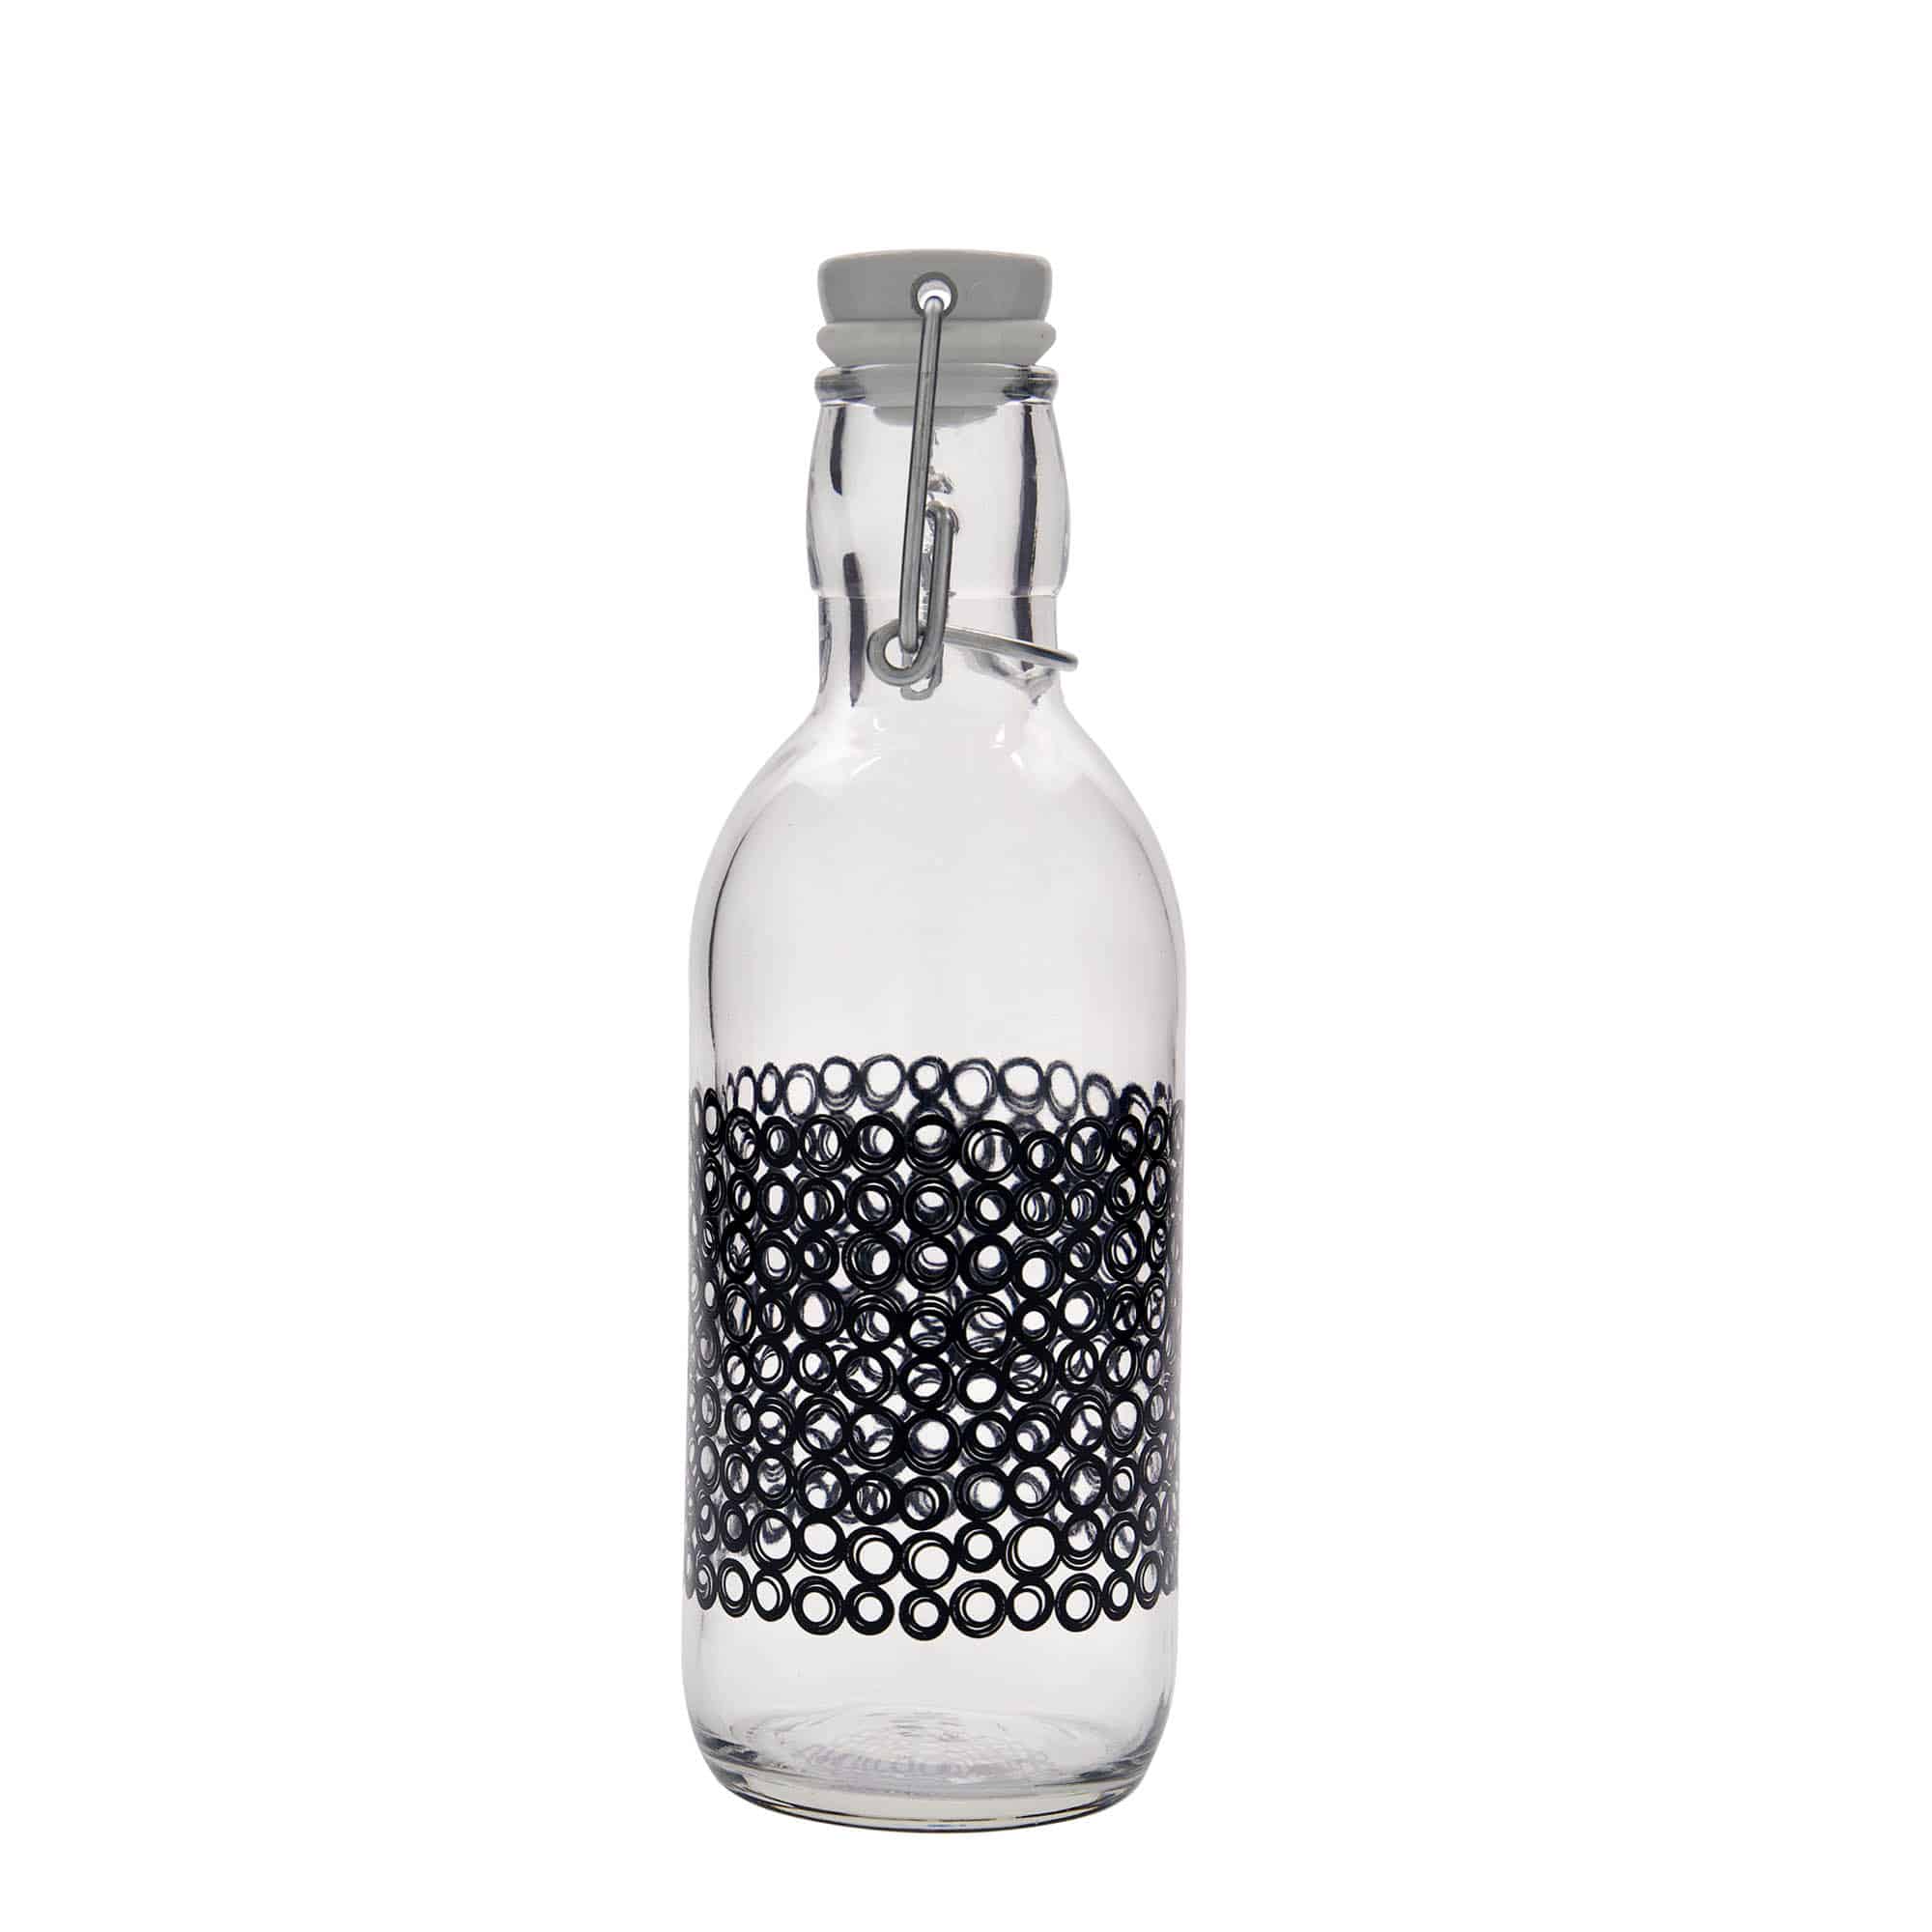 500 ml glass bottle 'Emilia', print: circola nero, closure: swing top